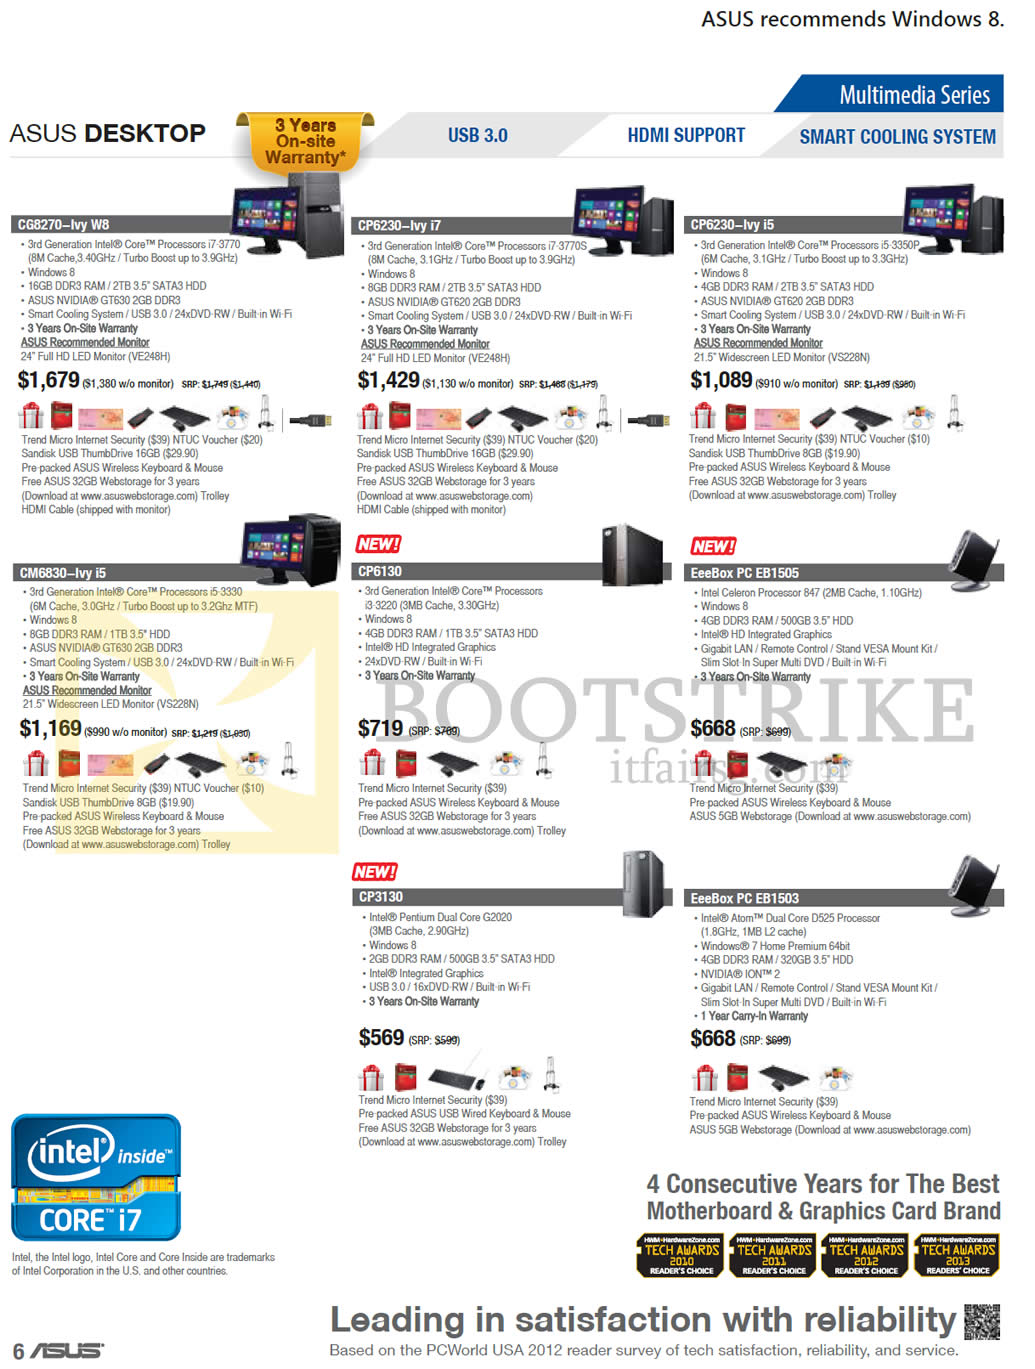 PC SHOW 2013 price list image brochure of ASUS Desktop PCs AG8270-Ivy W8, CP6230-IVy I7, CP6230-Ivy I5, CM6830-Ivy I5, CP6130, EeeBox PC EB1505, CP3130, Eeebox PC EB1503